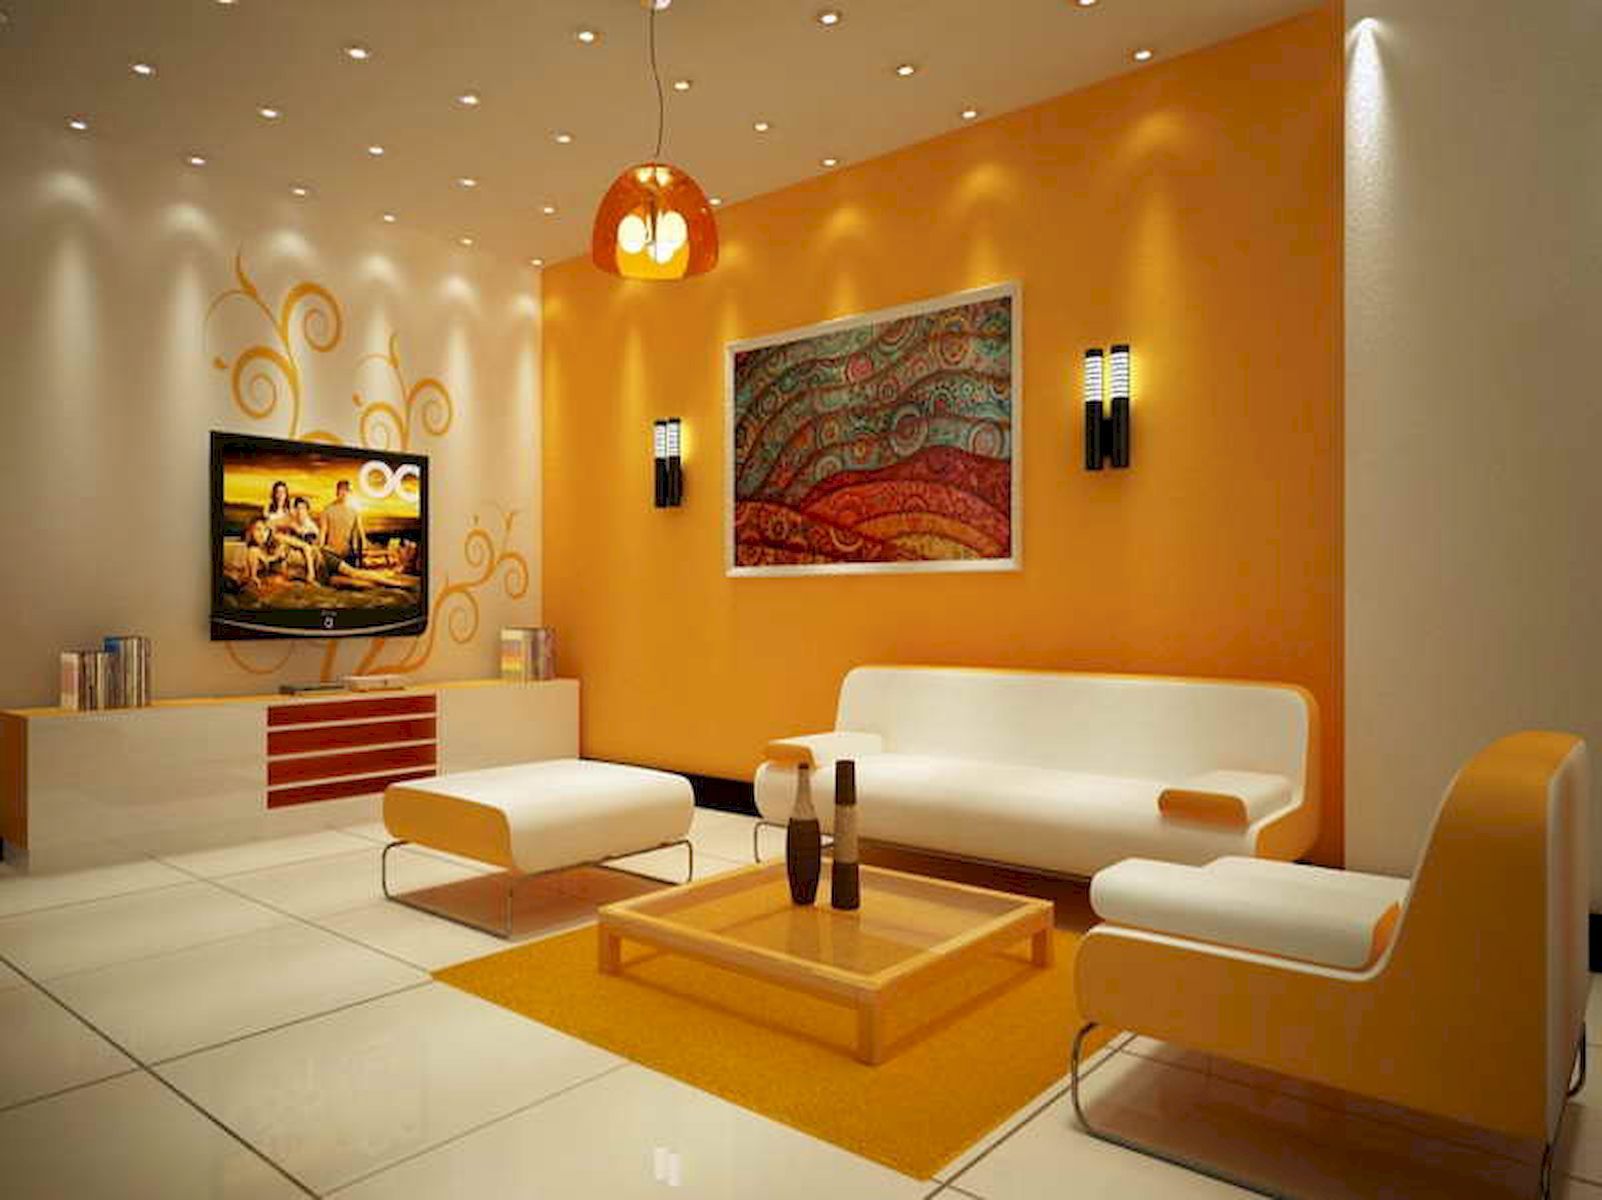 Dubai Painting Services